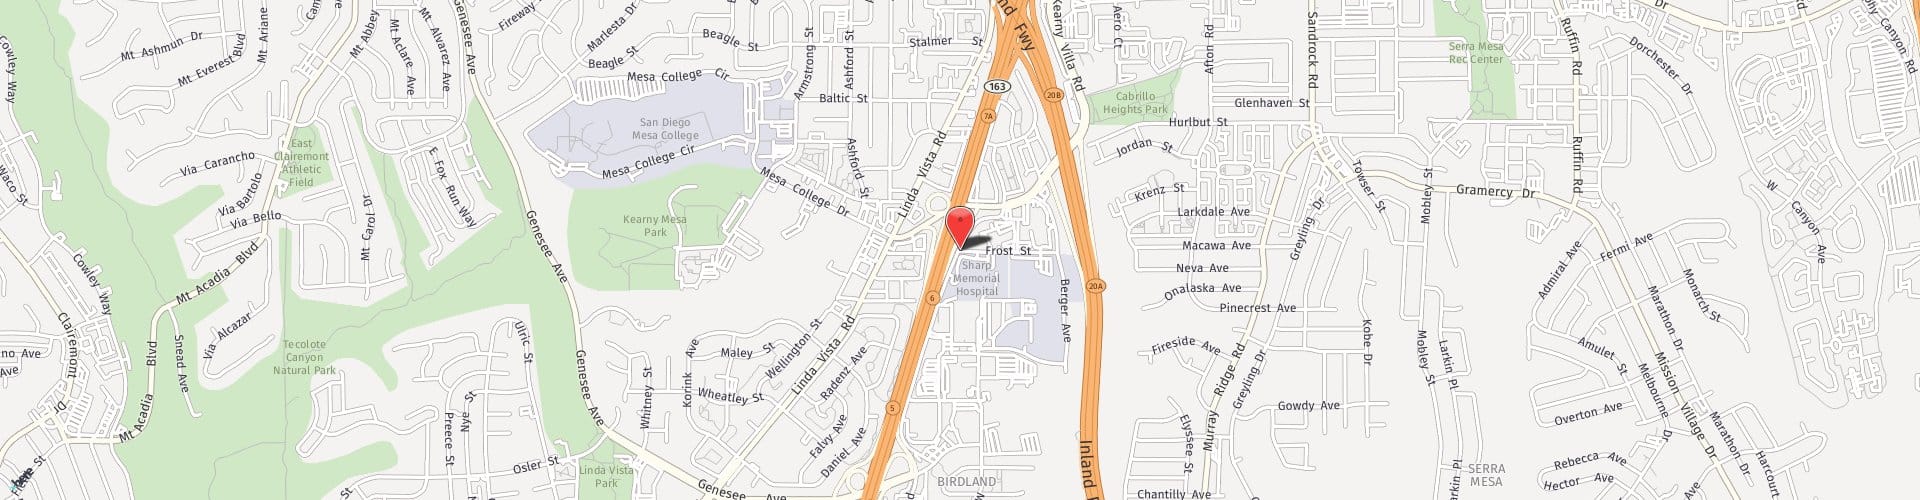 Location Map: 7901 Frost Street San Diego, CA 92123